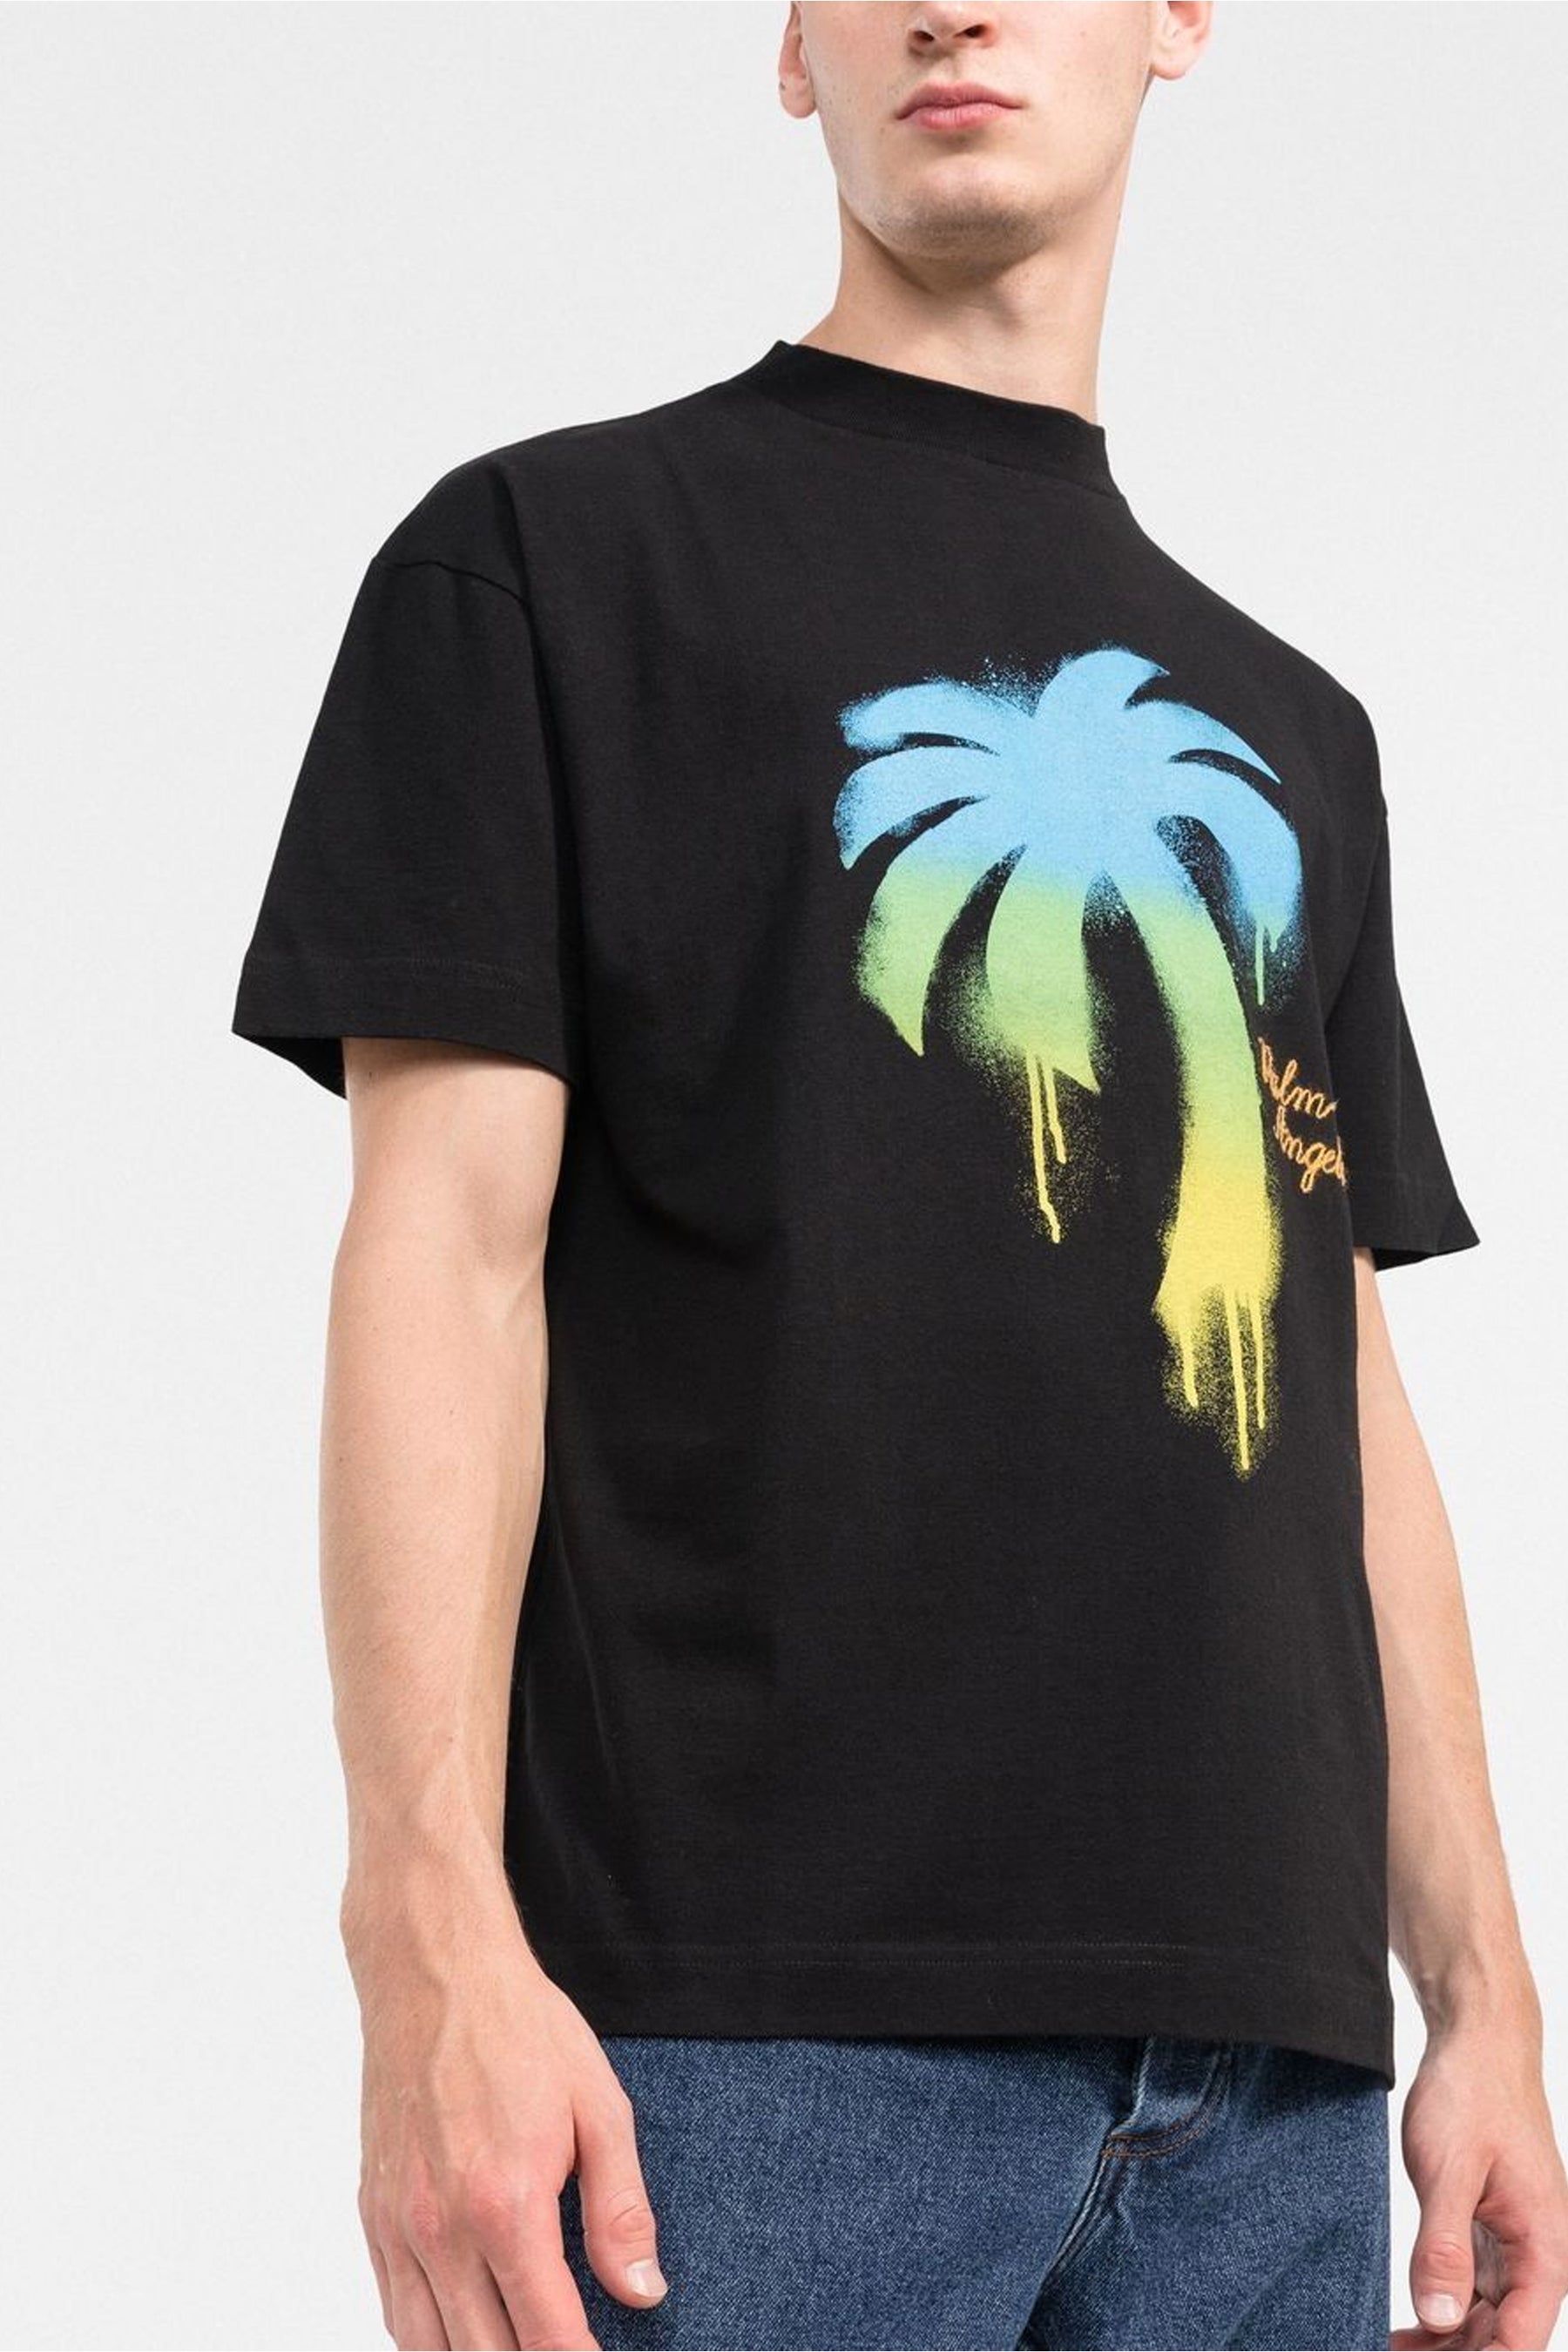 Palm Angels graffiti-print logo T-shirt